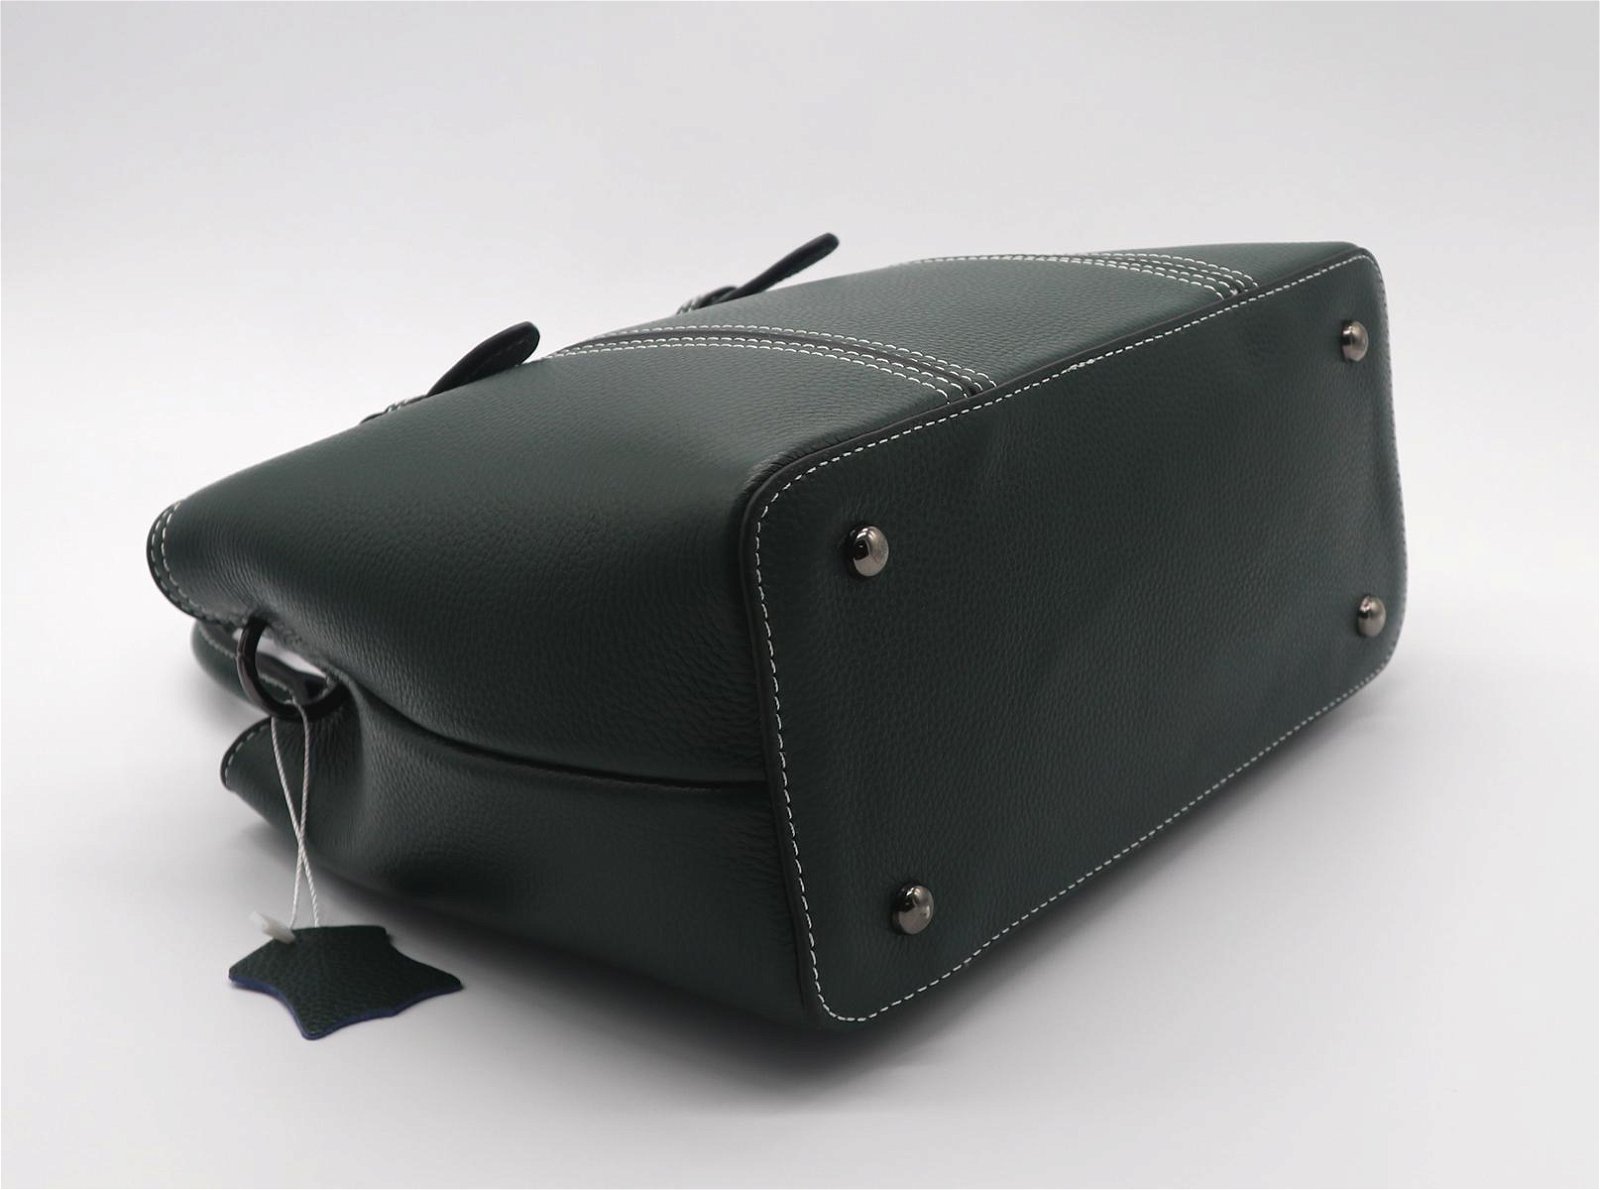 Genuine leather beauty medium size women handbag green colour  5